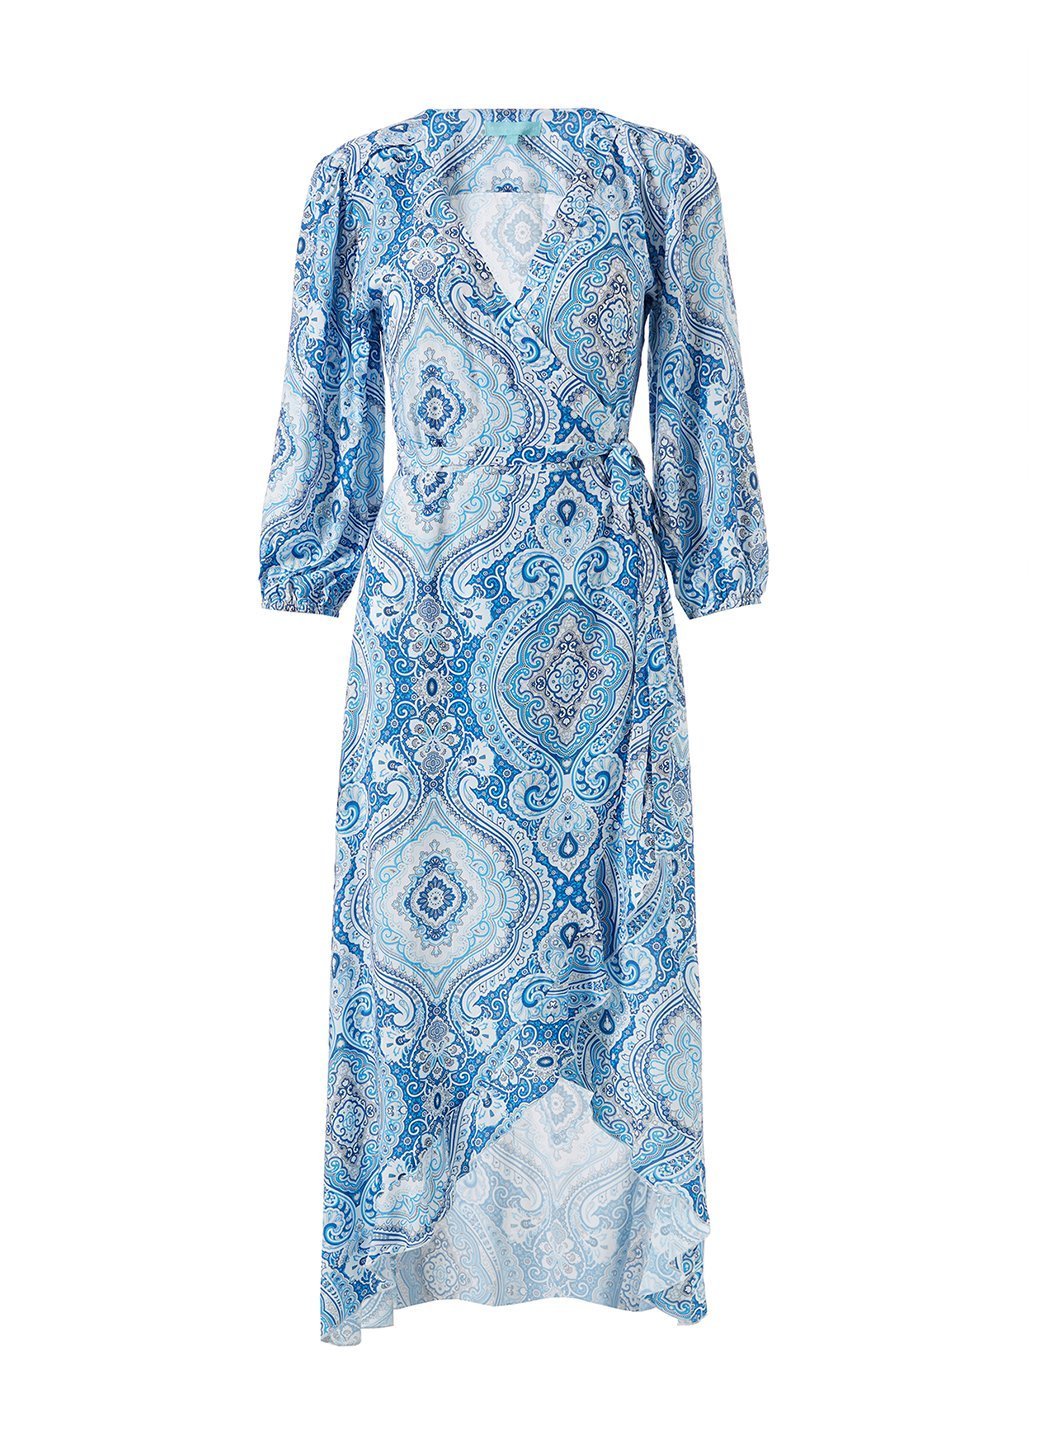 taylor-blue-paisley-dress-Cutout